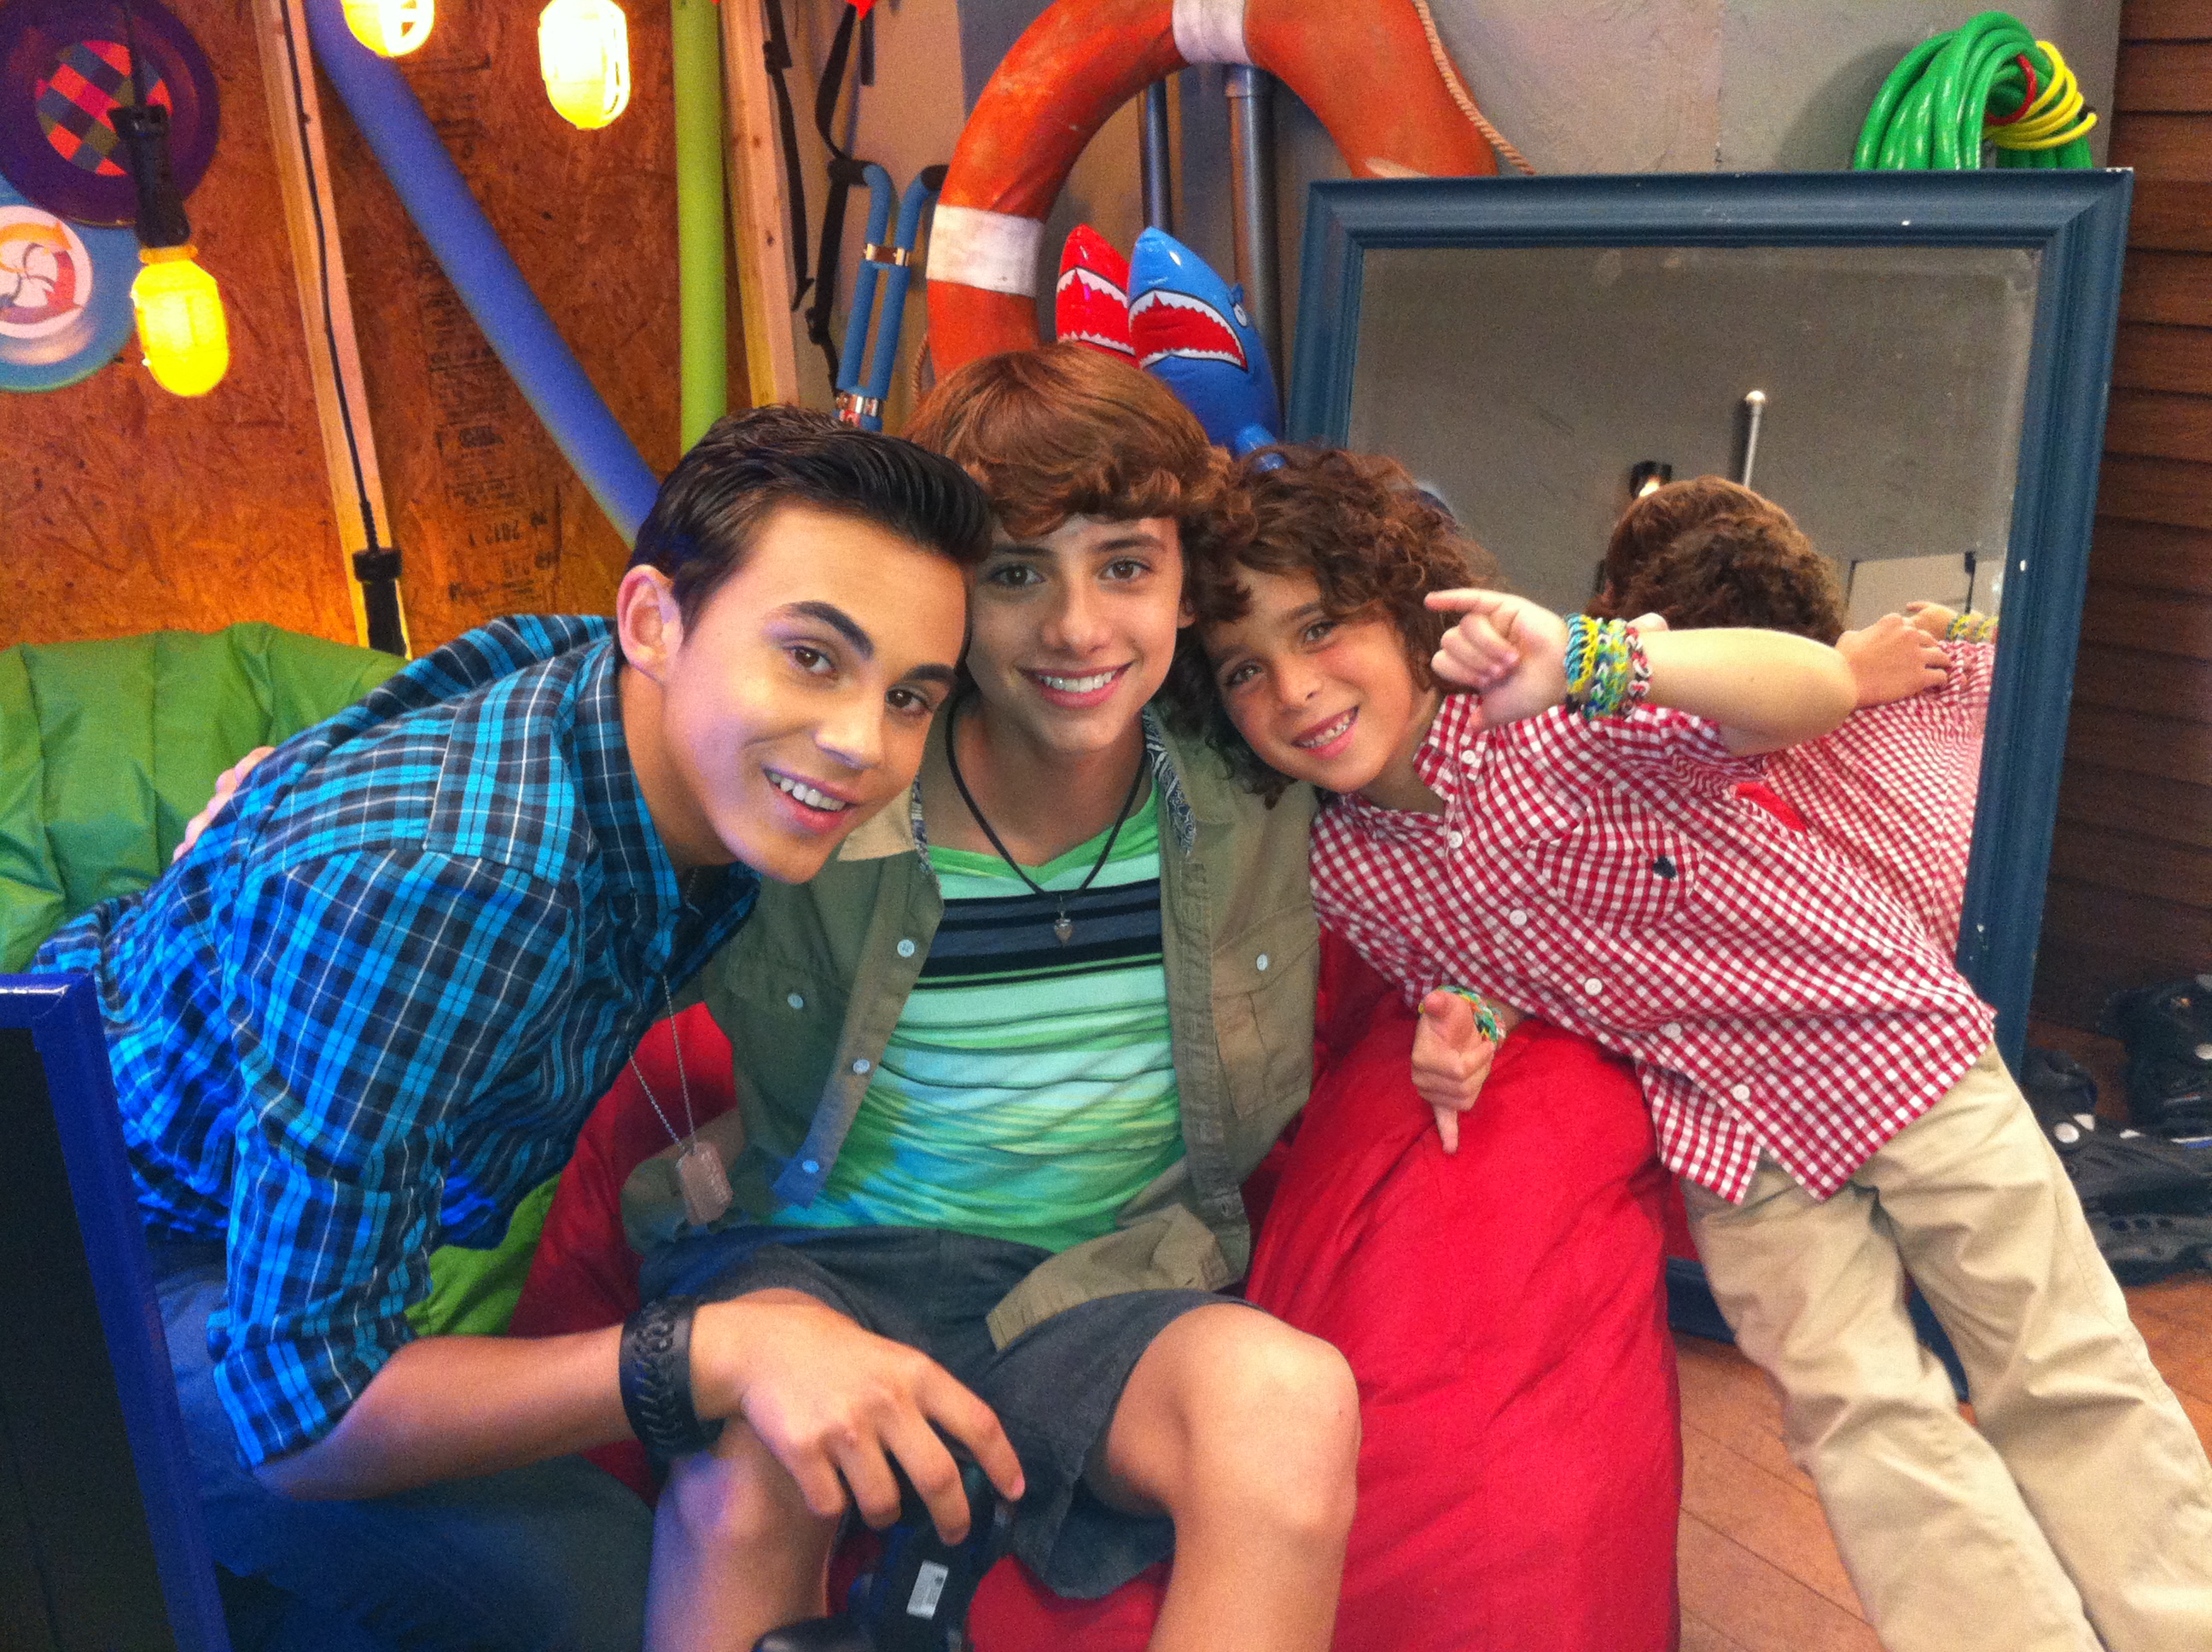 Jason, Mavrick Moreno and Tyler Alvarez on the Nickelodeon set.